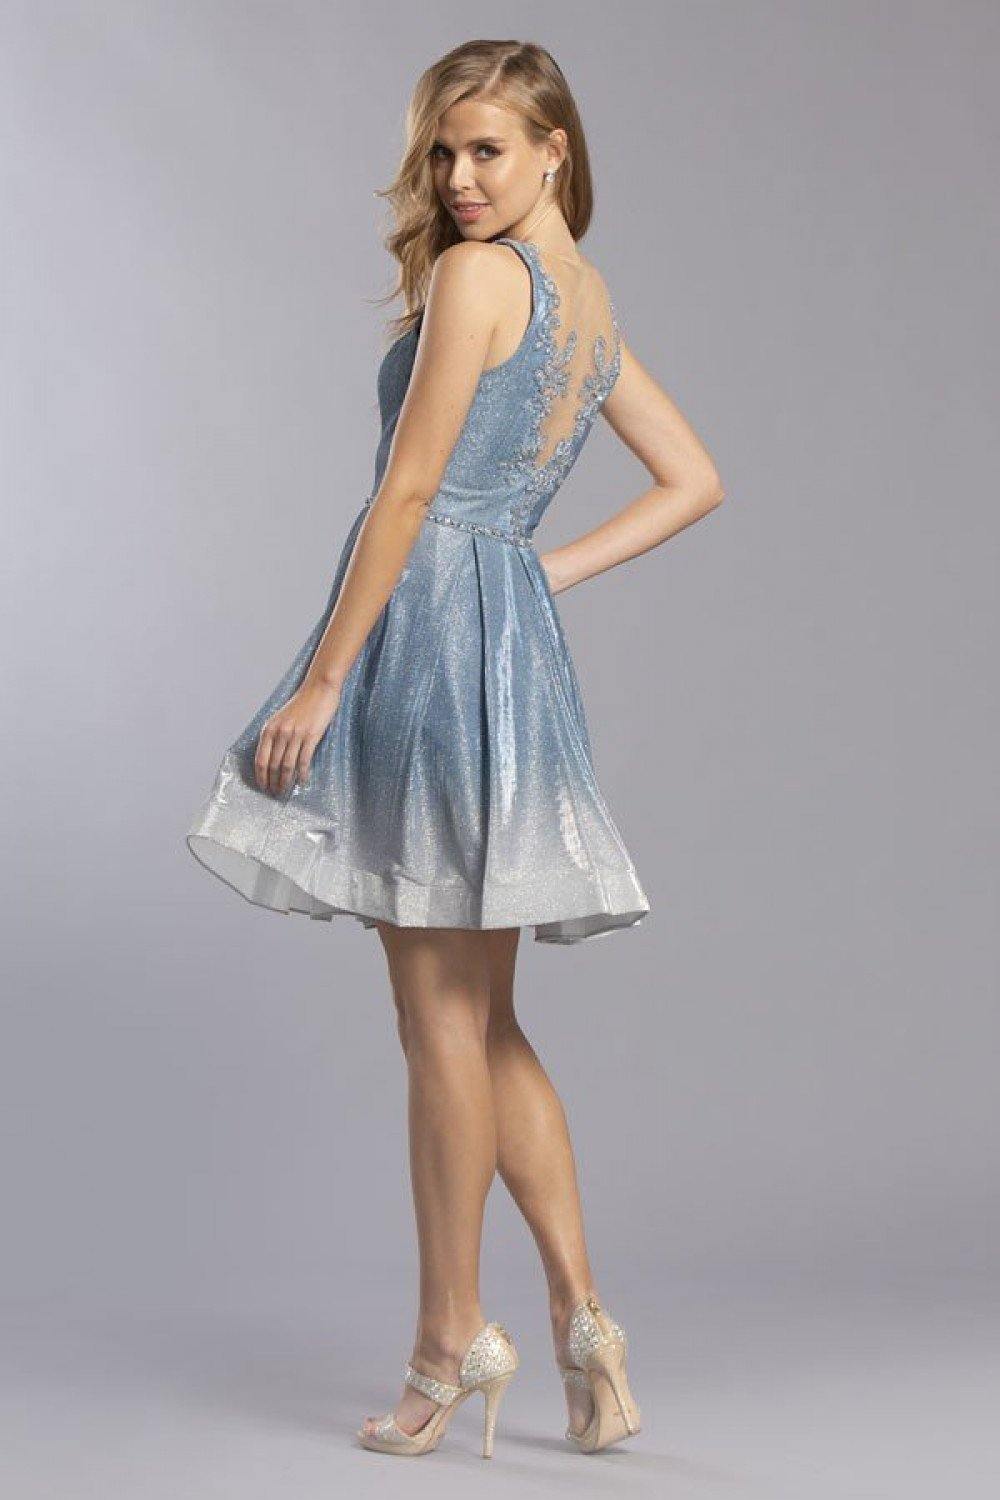 Sleeveless Short Prom Dress Sale - The Dress Outlet